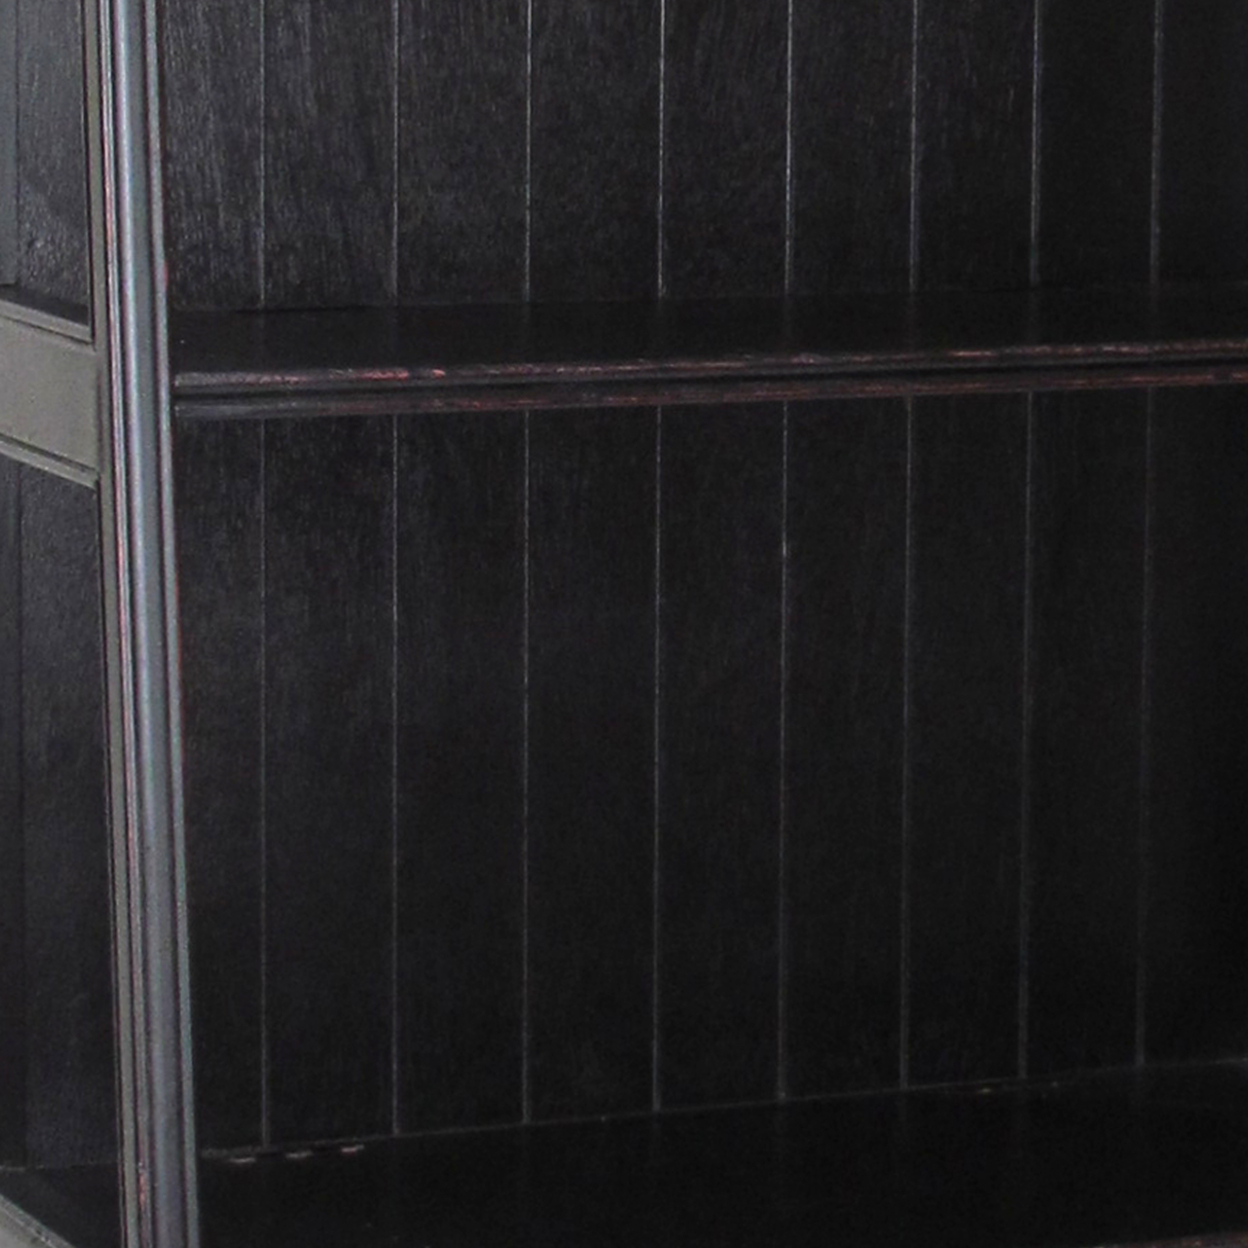 4 Tier Foldable Shelf Display Stand With Plank Style Back, Black- Saltoro Sherpi